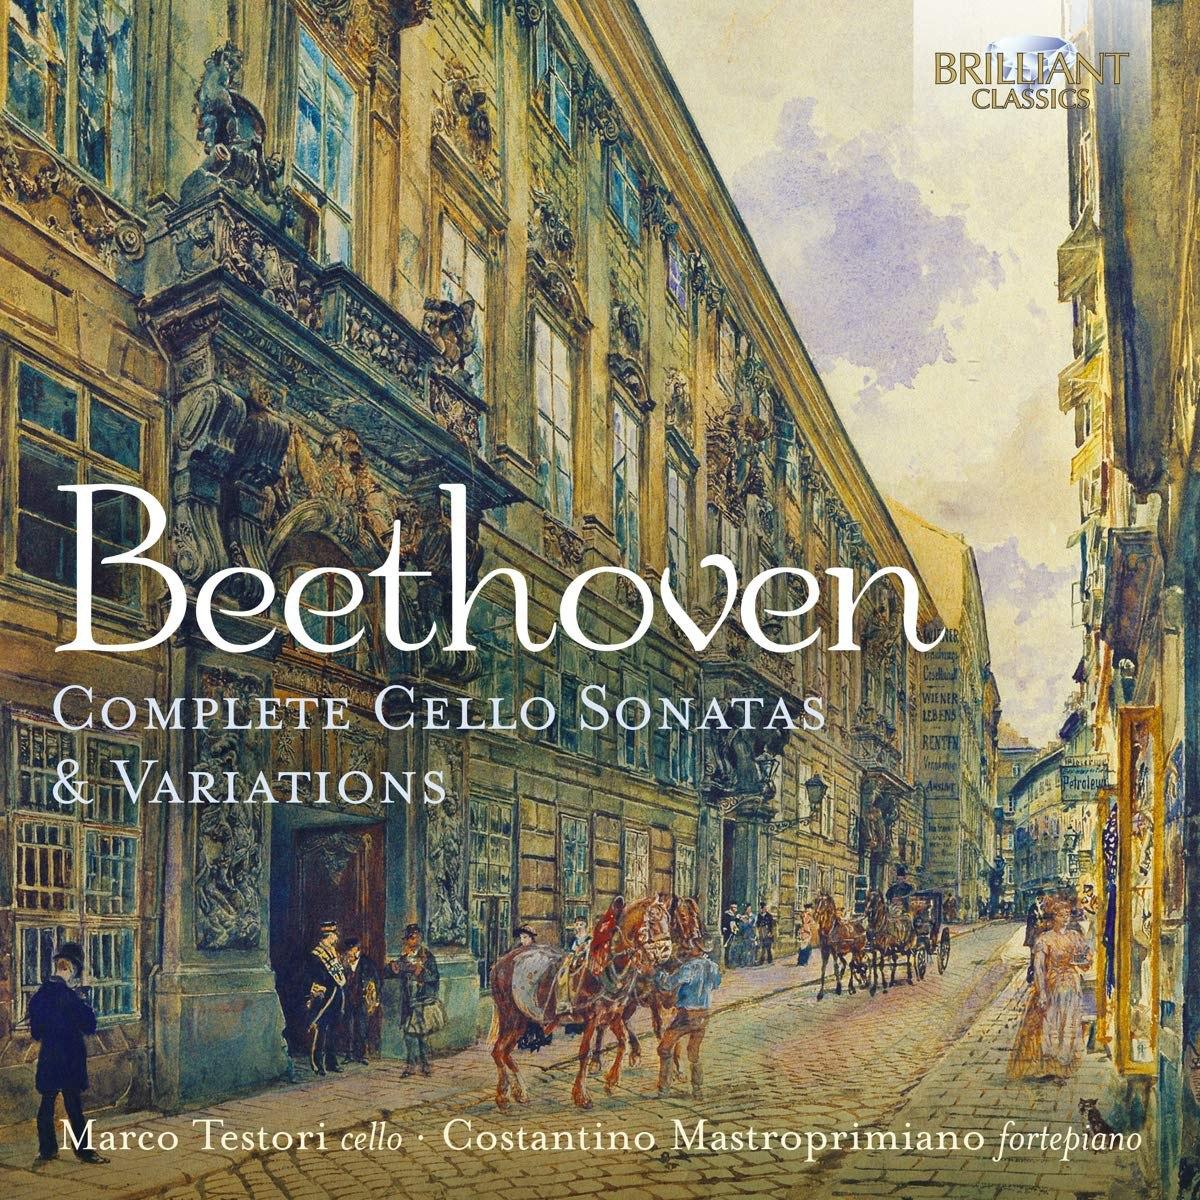 Costantino Mastroprimiano, Beethoven Complete Cello Sonatas and Variations